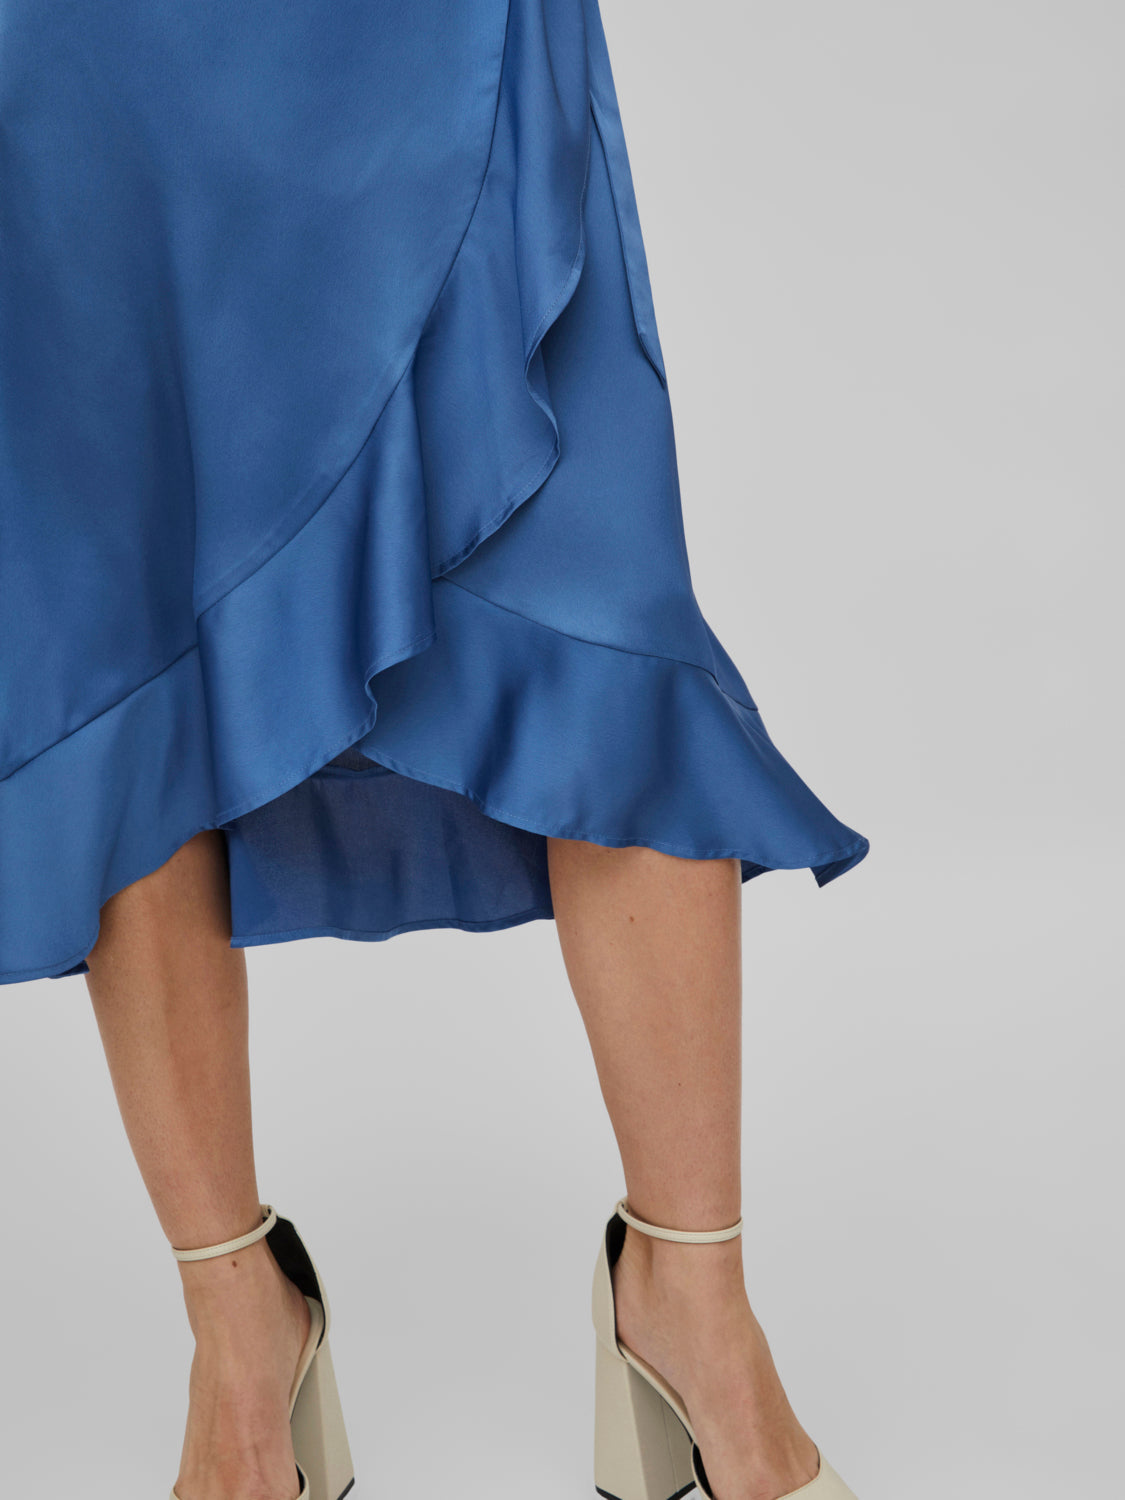 VIELLETTE Skirt - Federal Blue